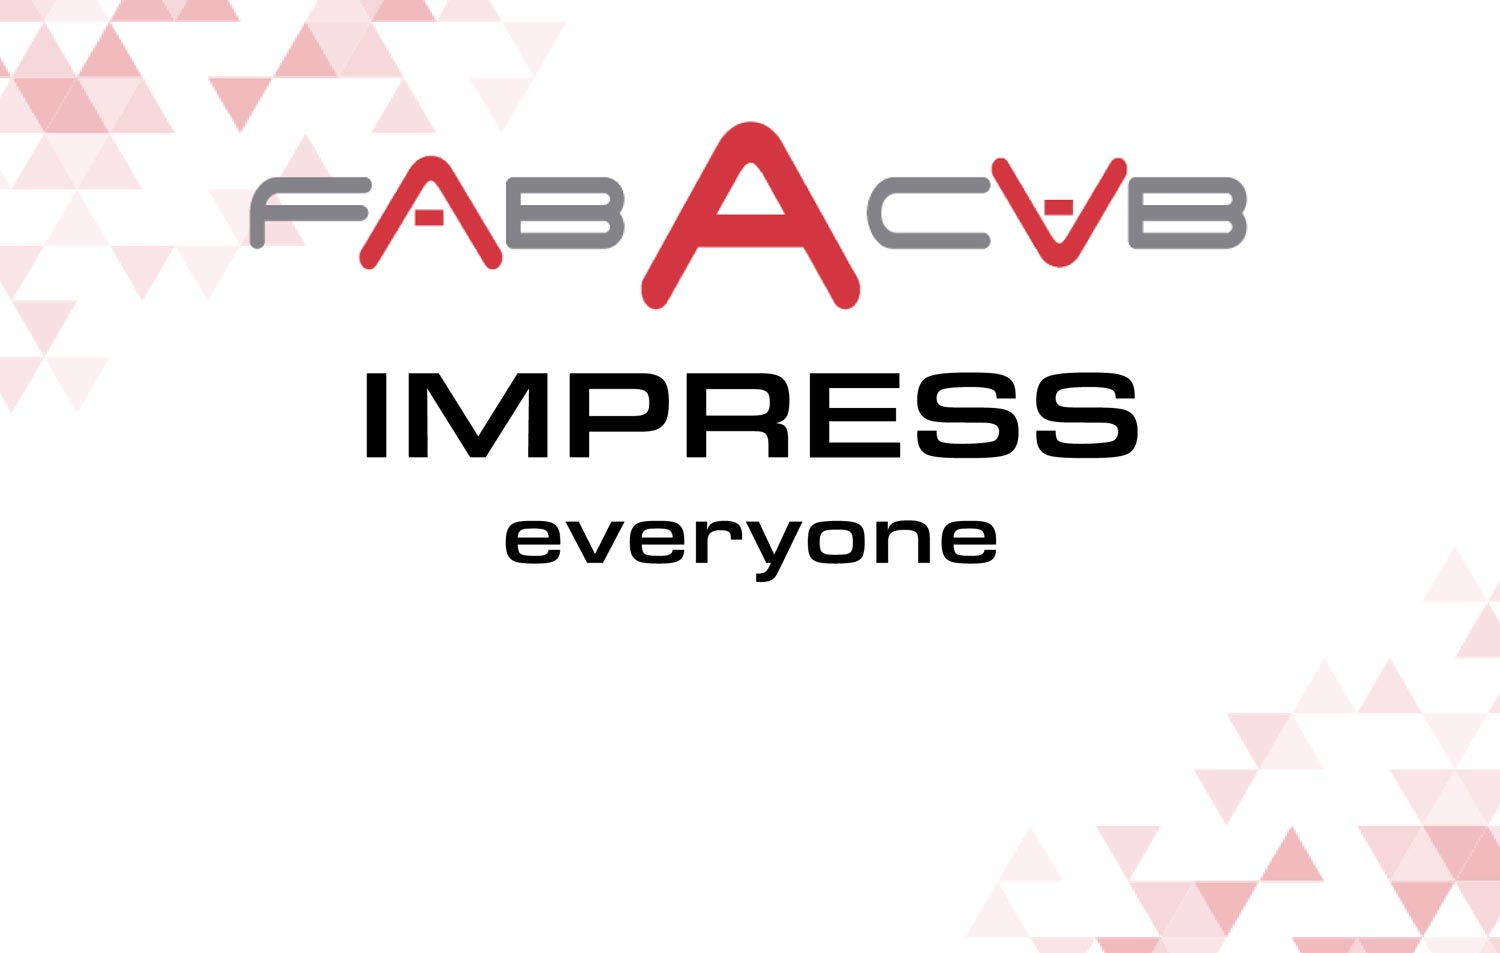 FabACab Impress